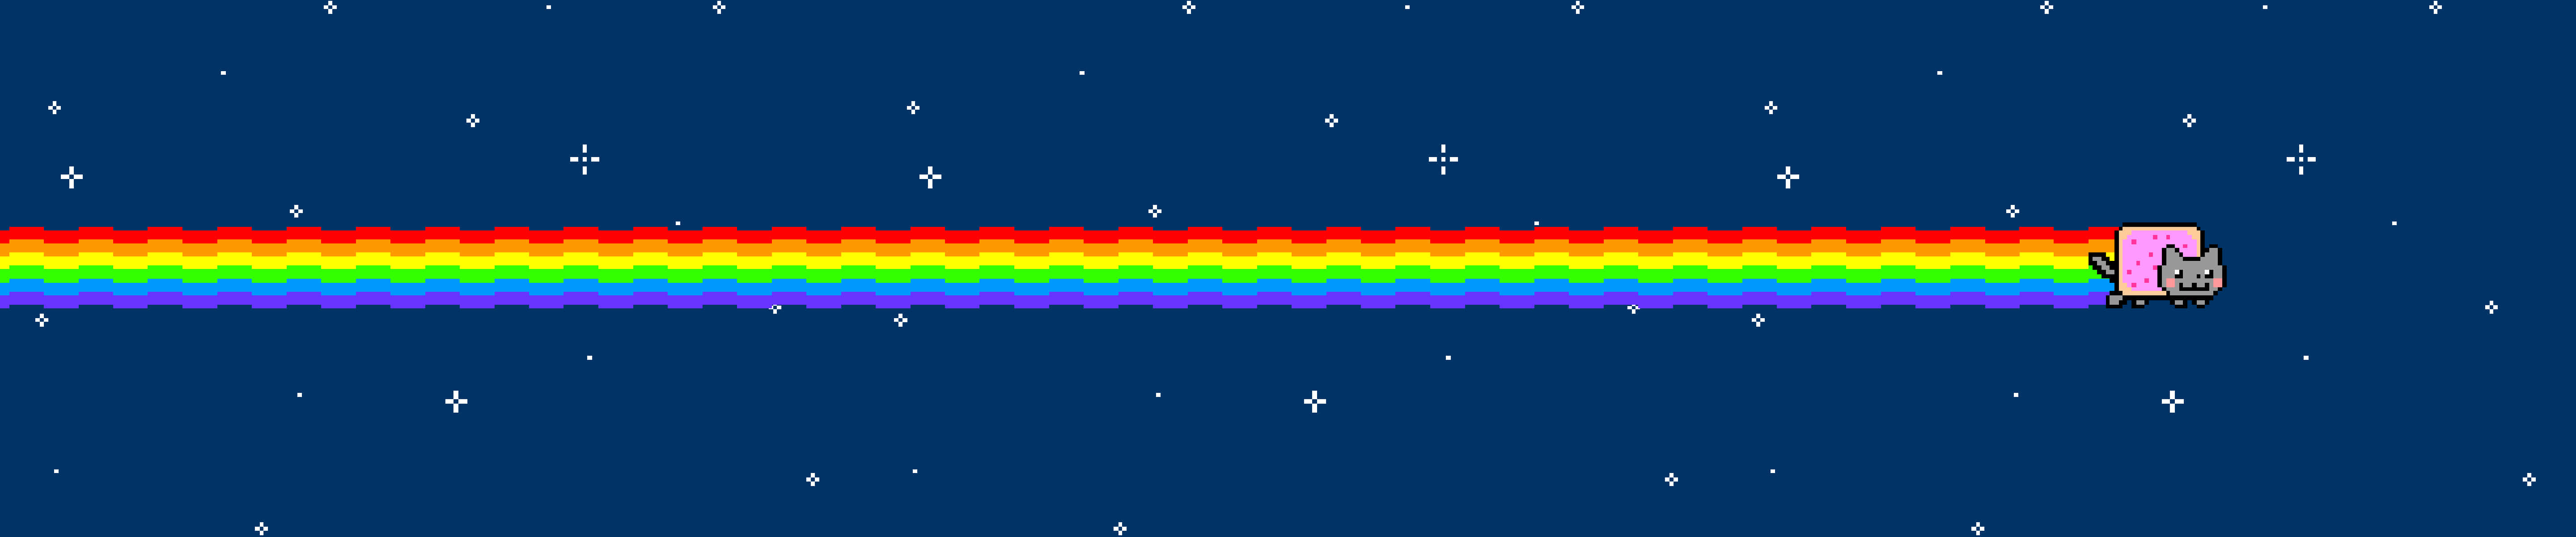 Cute Rainbow Nyan Cat Pixel 3 Monitor Background